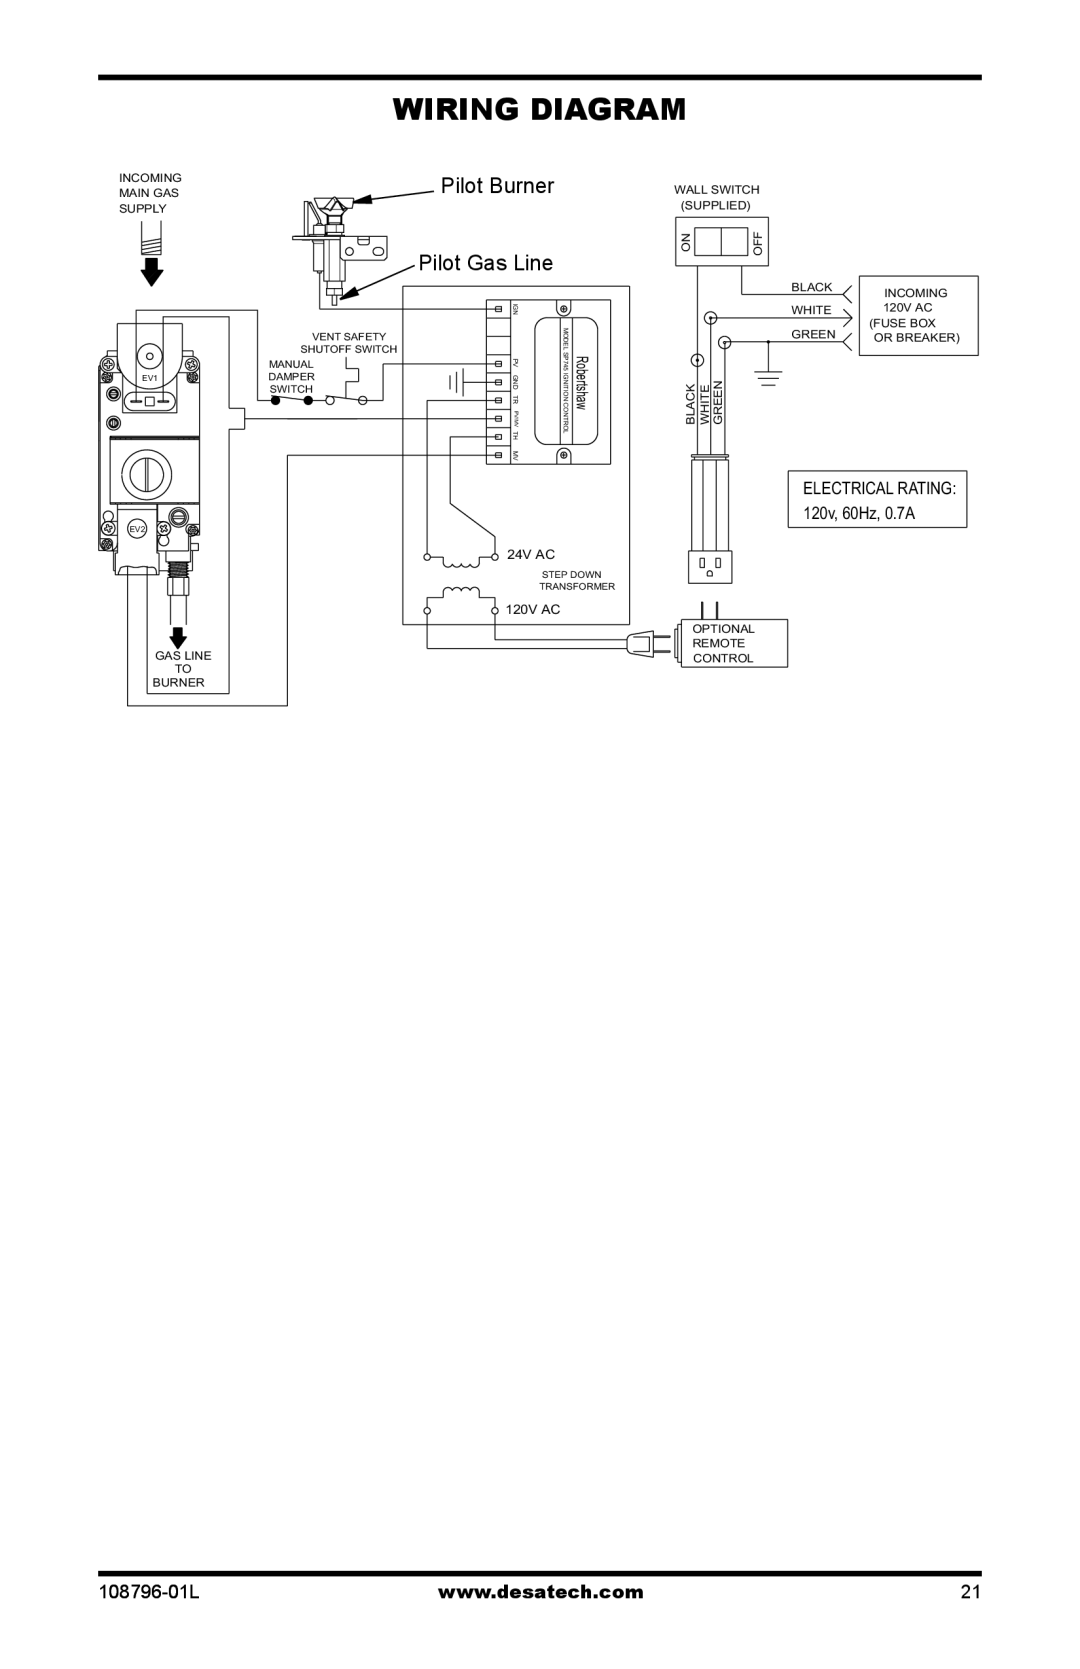 Desa Vm42eP installation manual Wiring Diagram, Pilot Burner Pilot Gas Line 